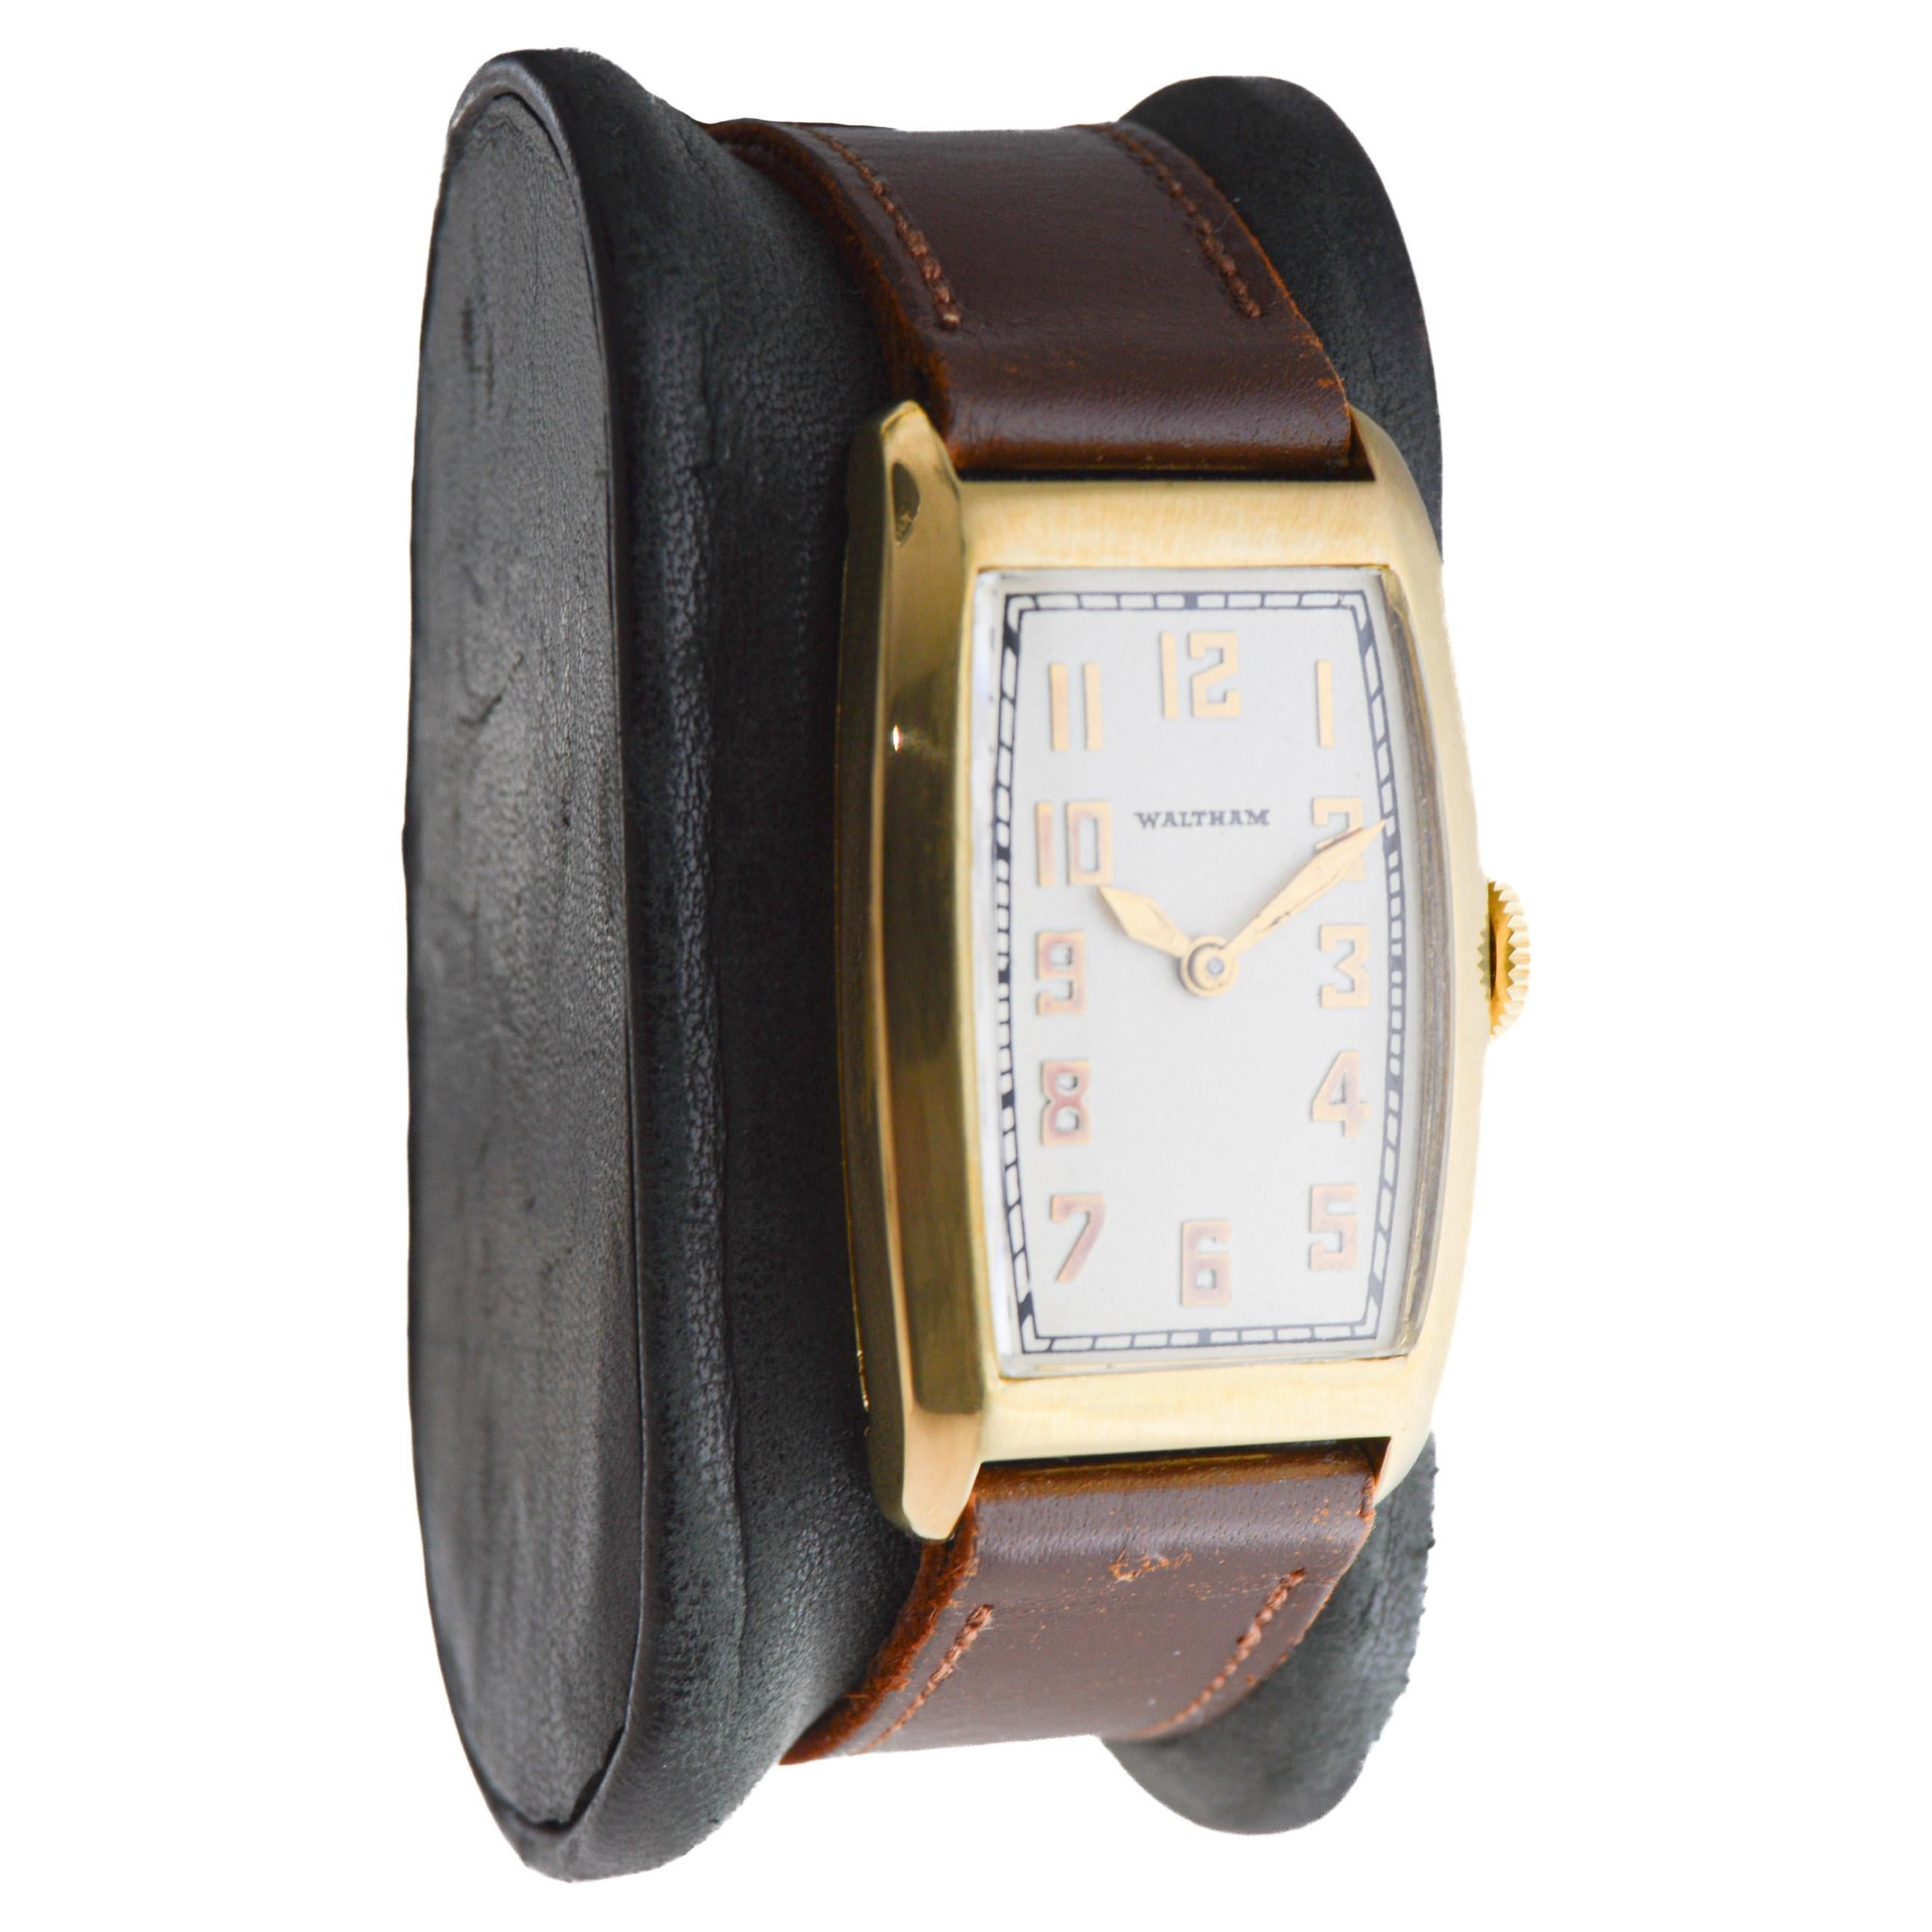 FABRIK / HAUS: Waltham Watch Company
STIL / REFERENZ: Art deco / Tonneau Form
METALL / MATERIAL: Goldgefüllt
CIRCA / JAHR: 1934
ABMESSUNGEN / GRÖSSE: Länge 41mm X Breite 24mm
UHRWERK / KALIBER: Handaufzug / 17 Jewels / Kaliber 
ZIFFERBLATT / ZEIGER: